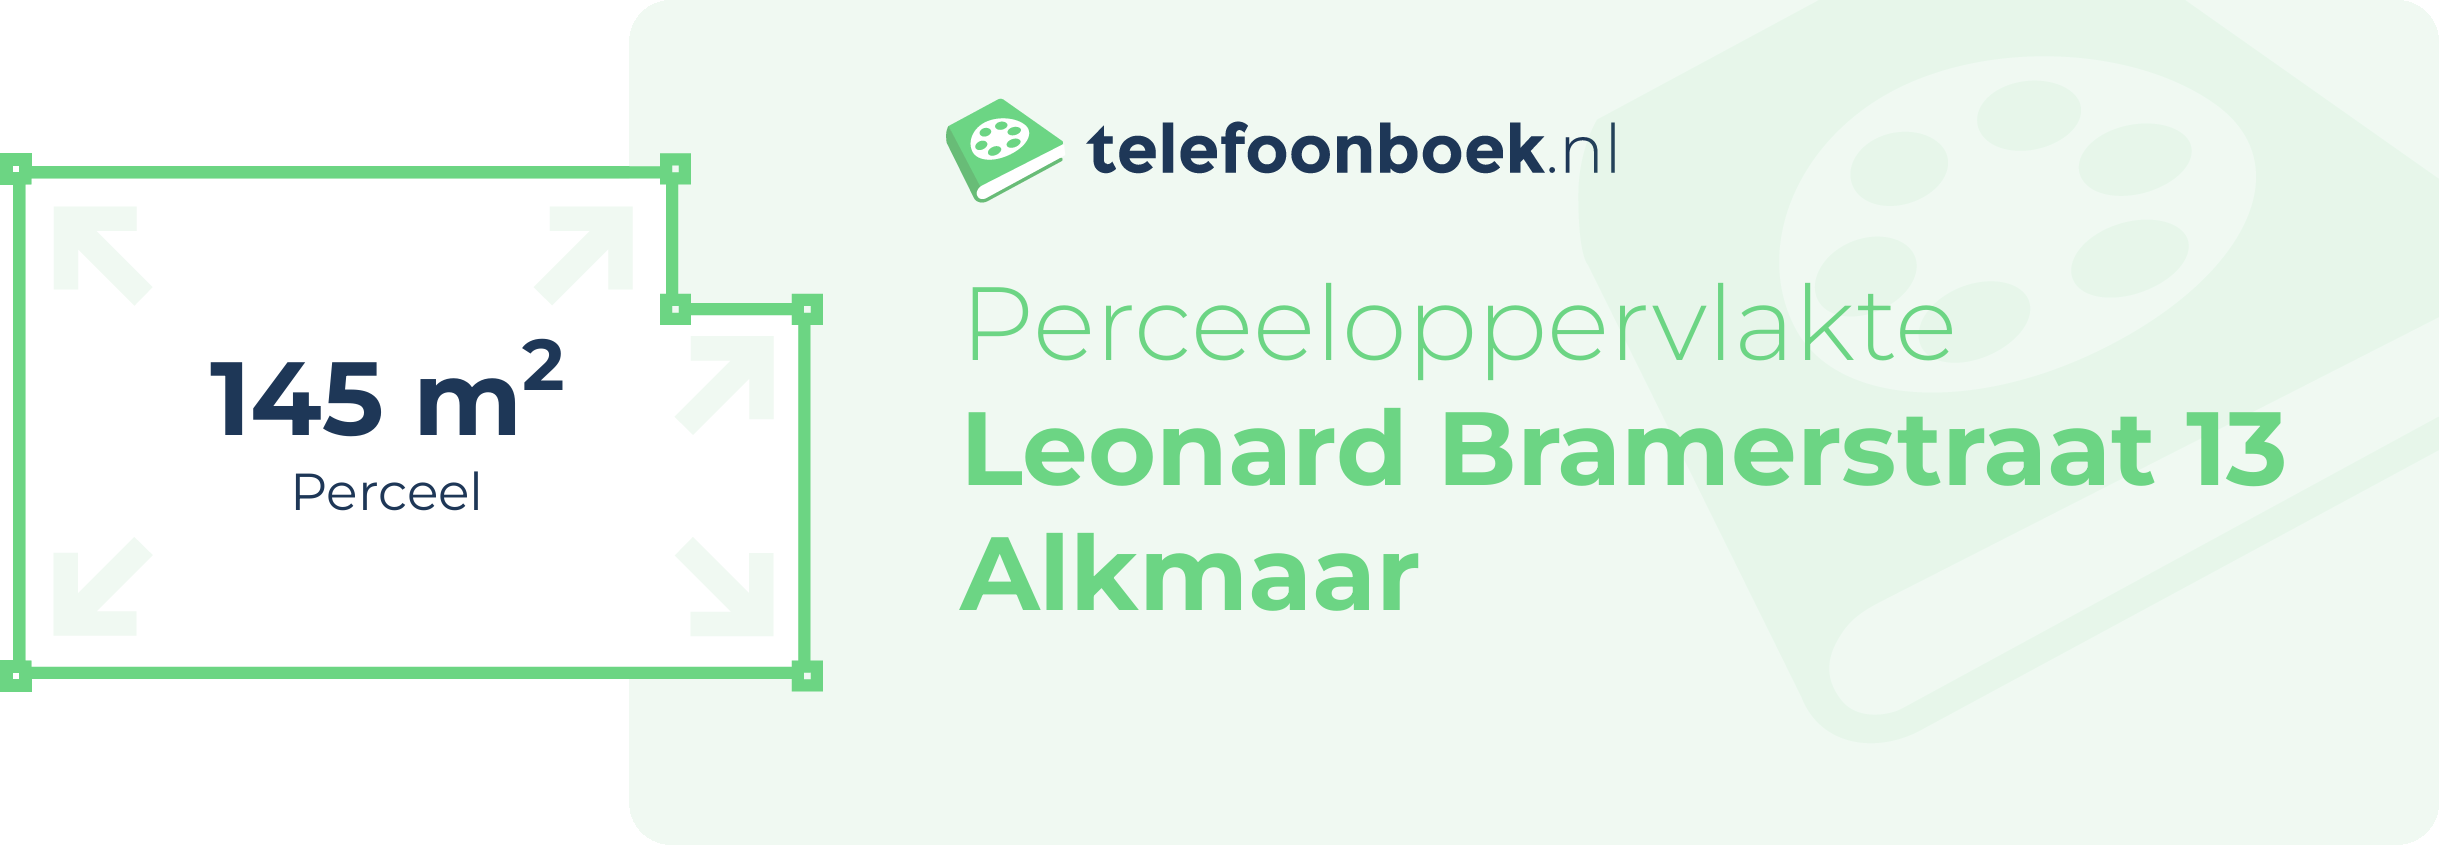 Perceeloppervlakte Leonard Bramerstraat 13 Alkmaar